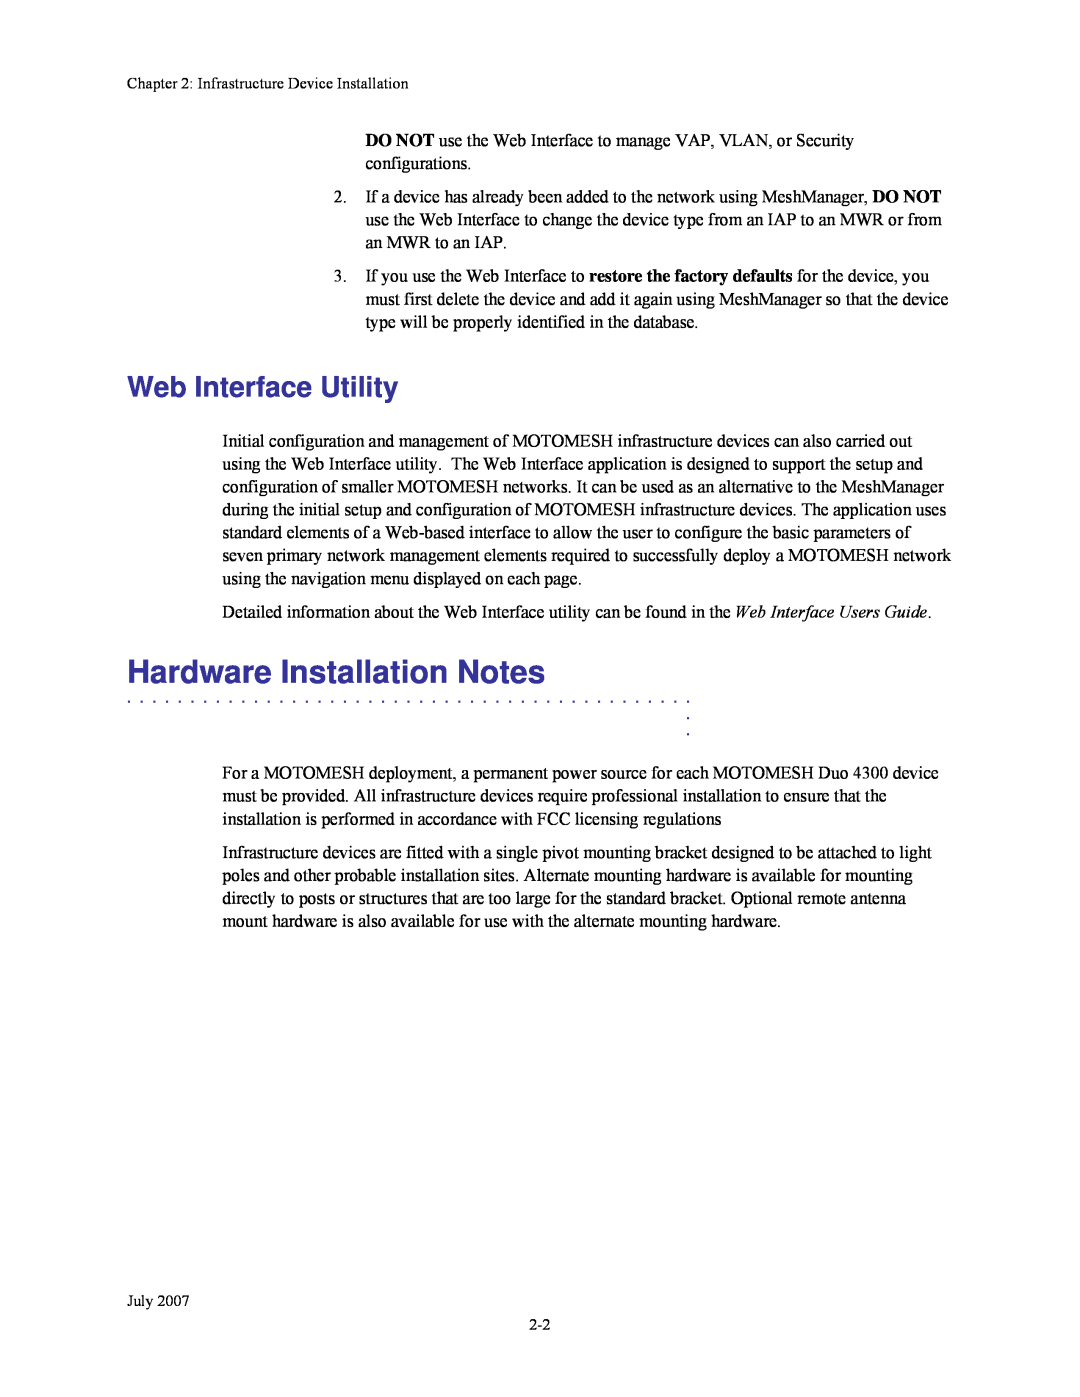 Nikon 4300 manual Hardware Installation Notes, Web Interface Utility 